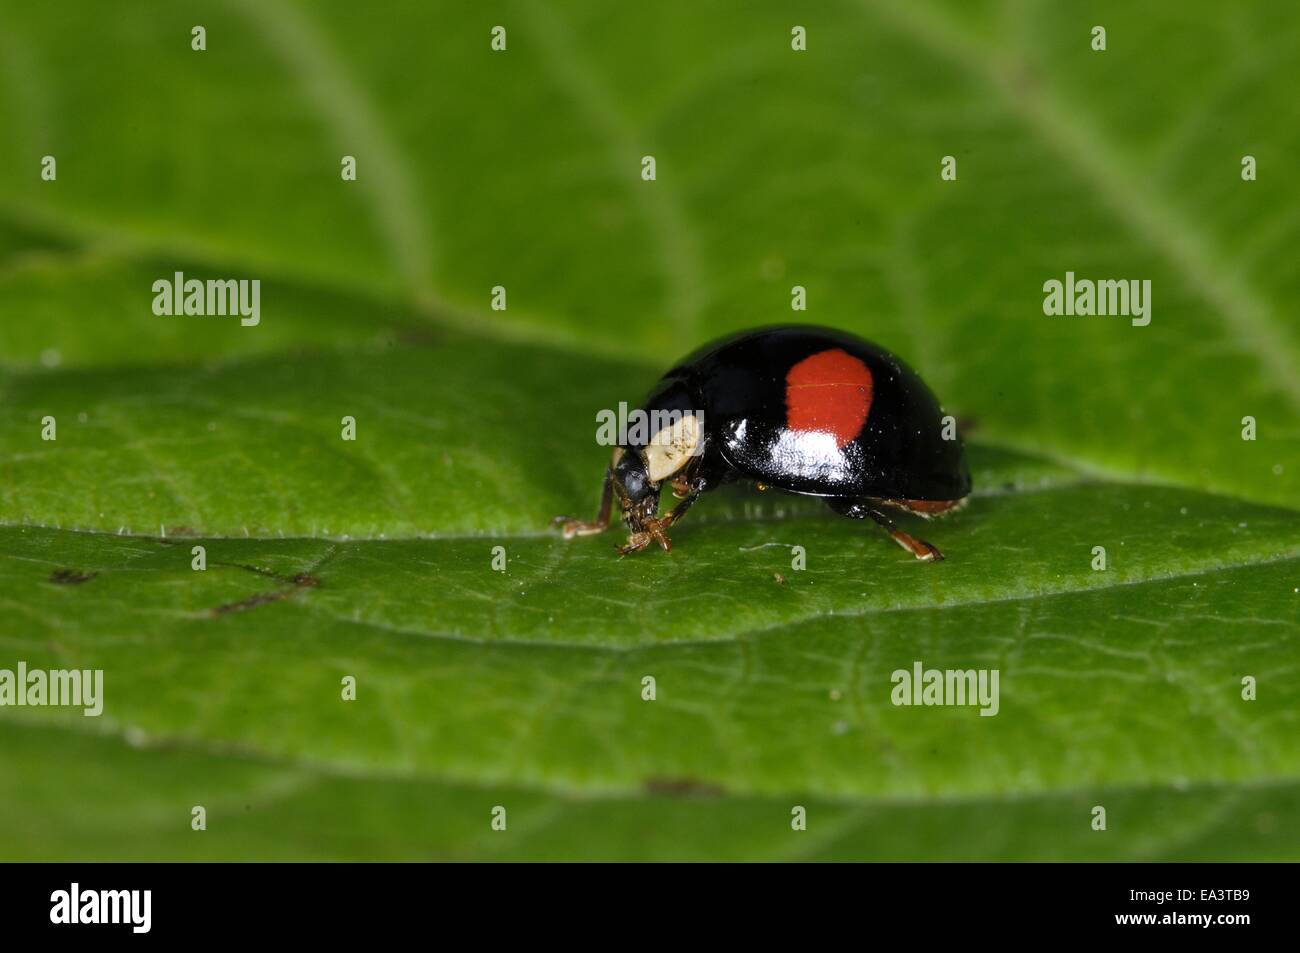 Multicoloured Asiatic Ladybeetle - Asiatic Ladybird - Harlequin Ladybird (Harmonia axyridis) imago on leaf Stock Photo